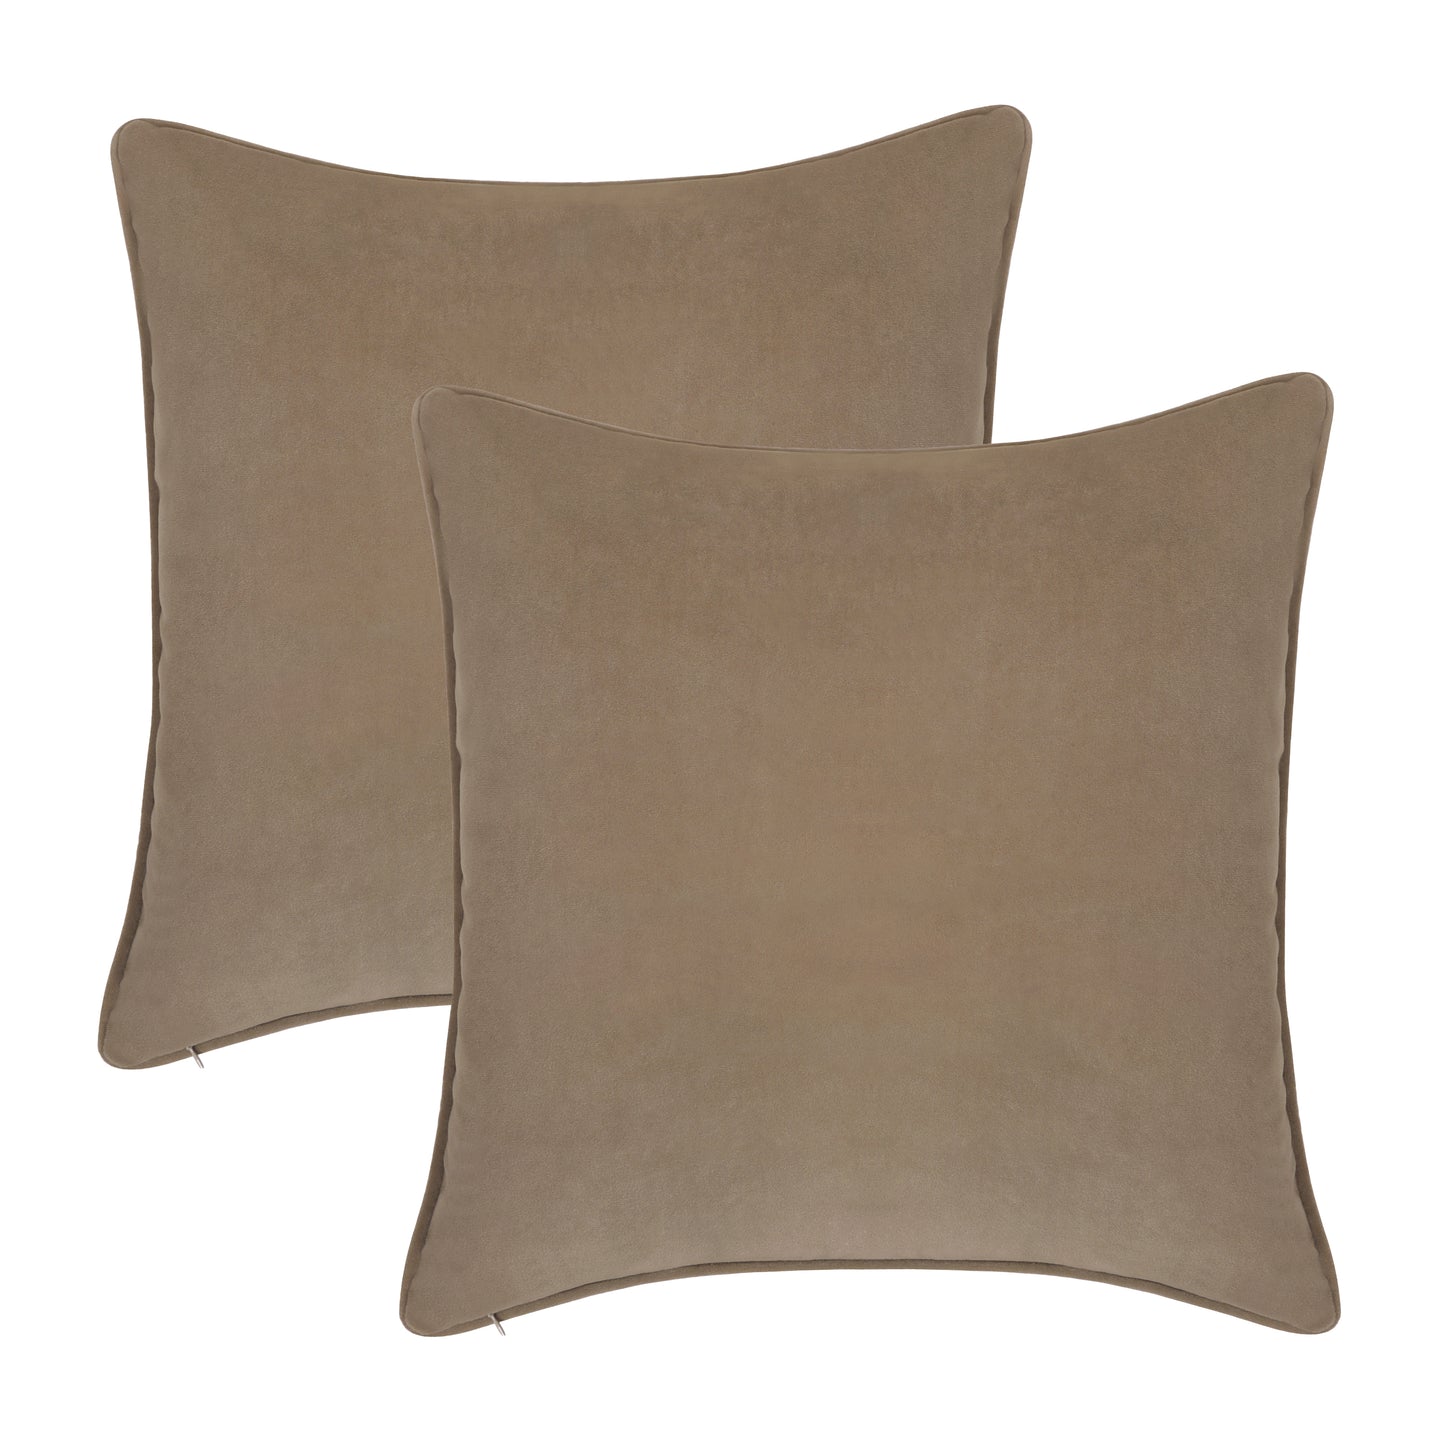 Velvet Throw Pillow Covers Set of 2, Vibrant Colors and Hidden YKK Zipper